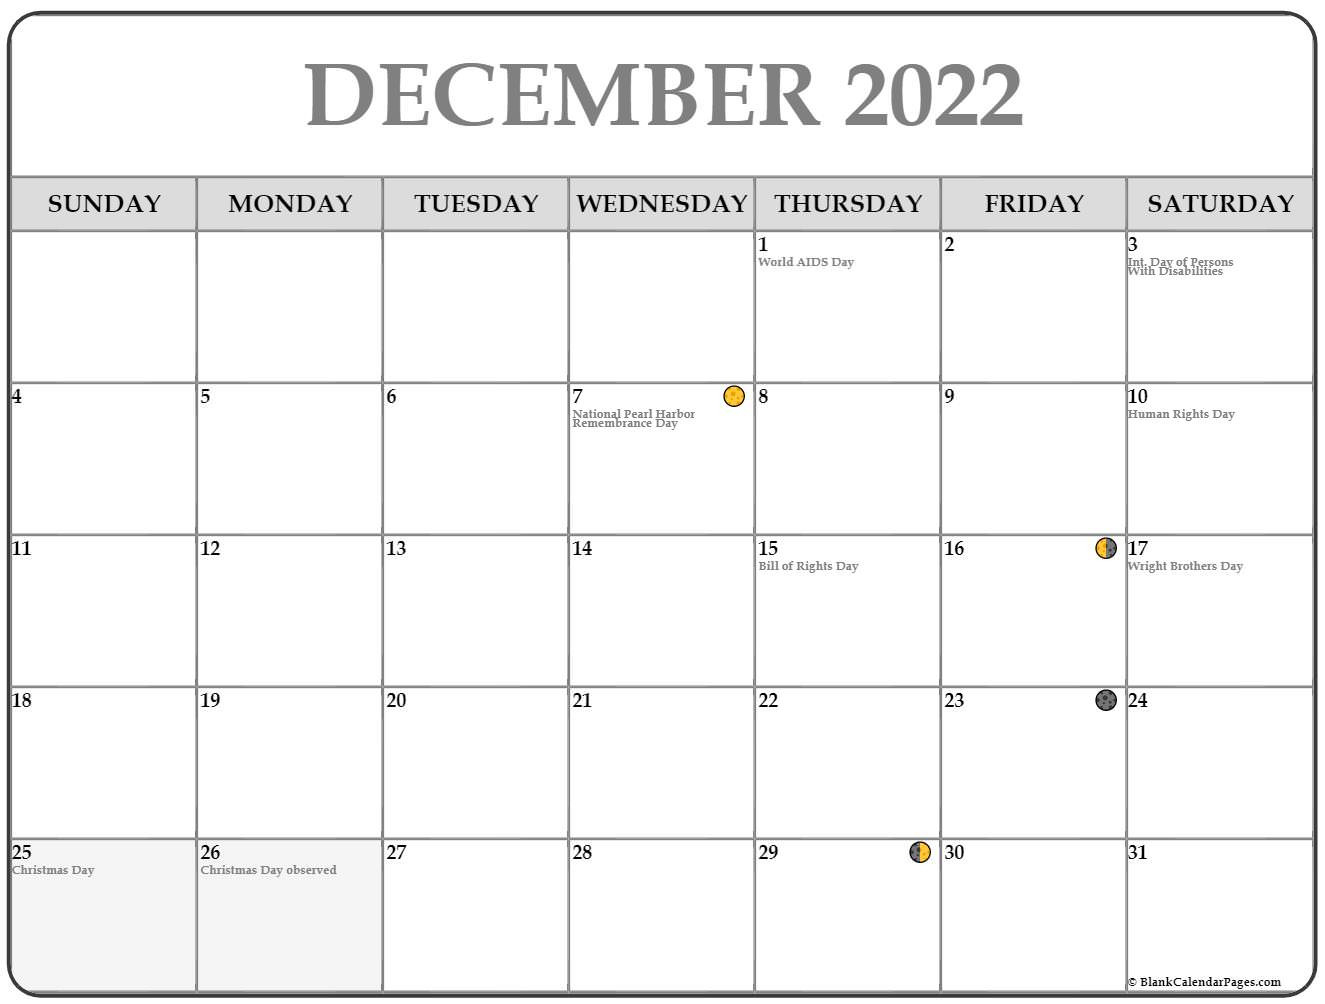 December 2022 Lunar Calendar | Moon Phase Calendar  December 2022 To December 2022 Calendar Printable